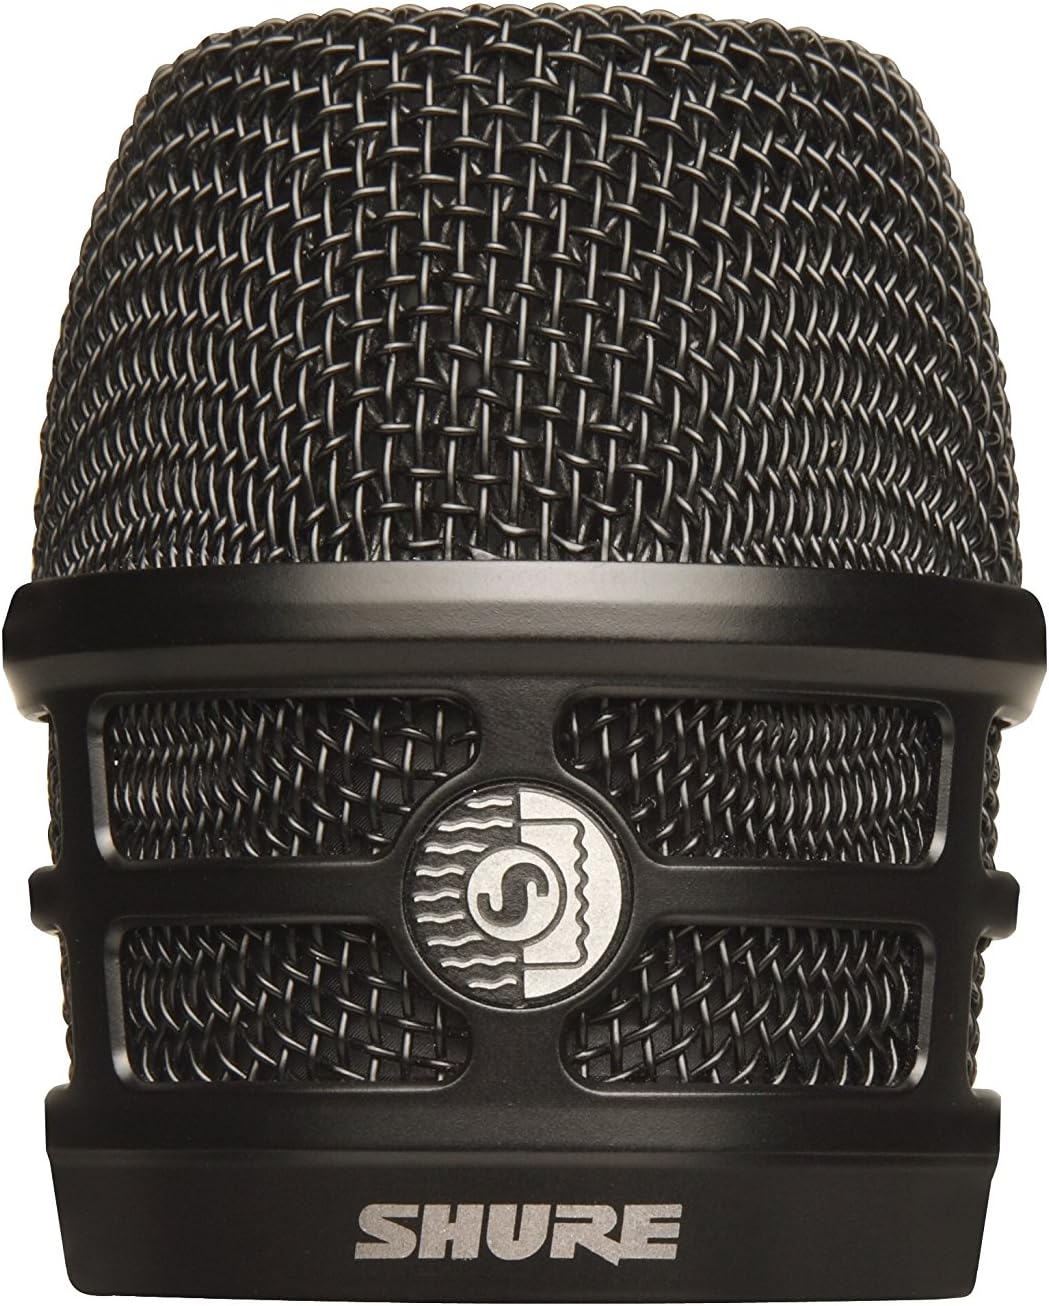 Shure KSM8/B Dualdyne™ cardioid dynamic vocal microphone - black